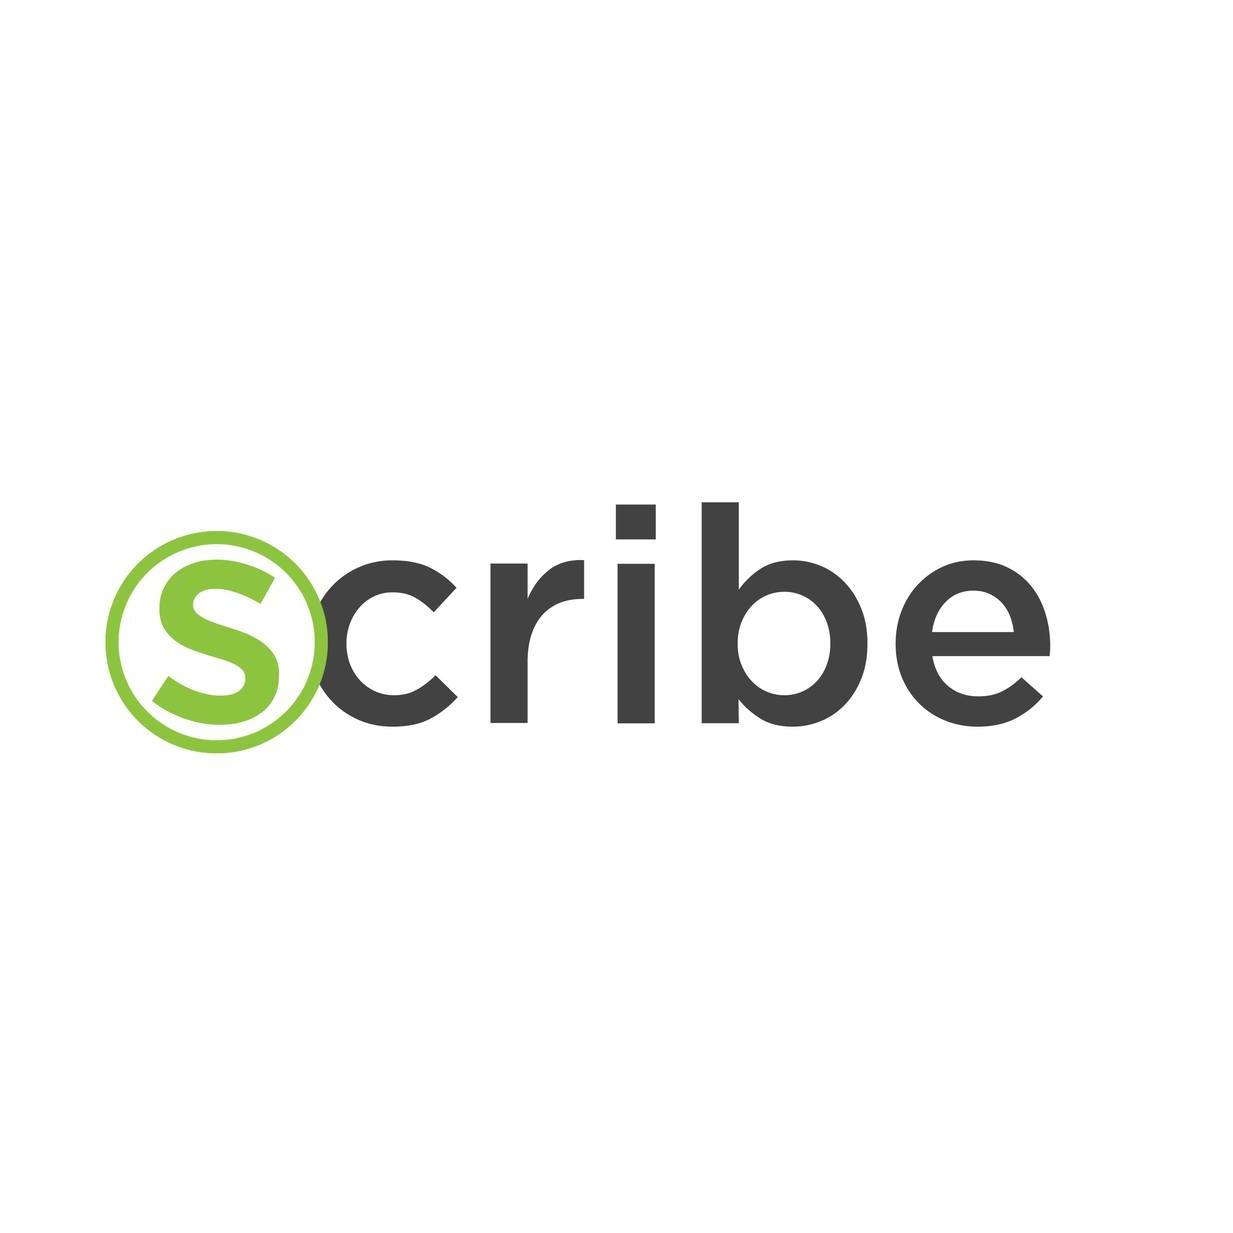 Scribe Security logo